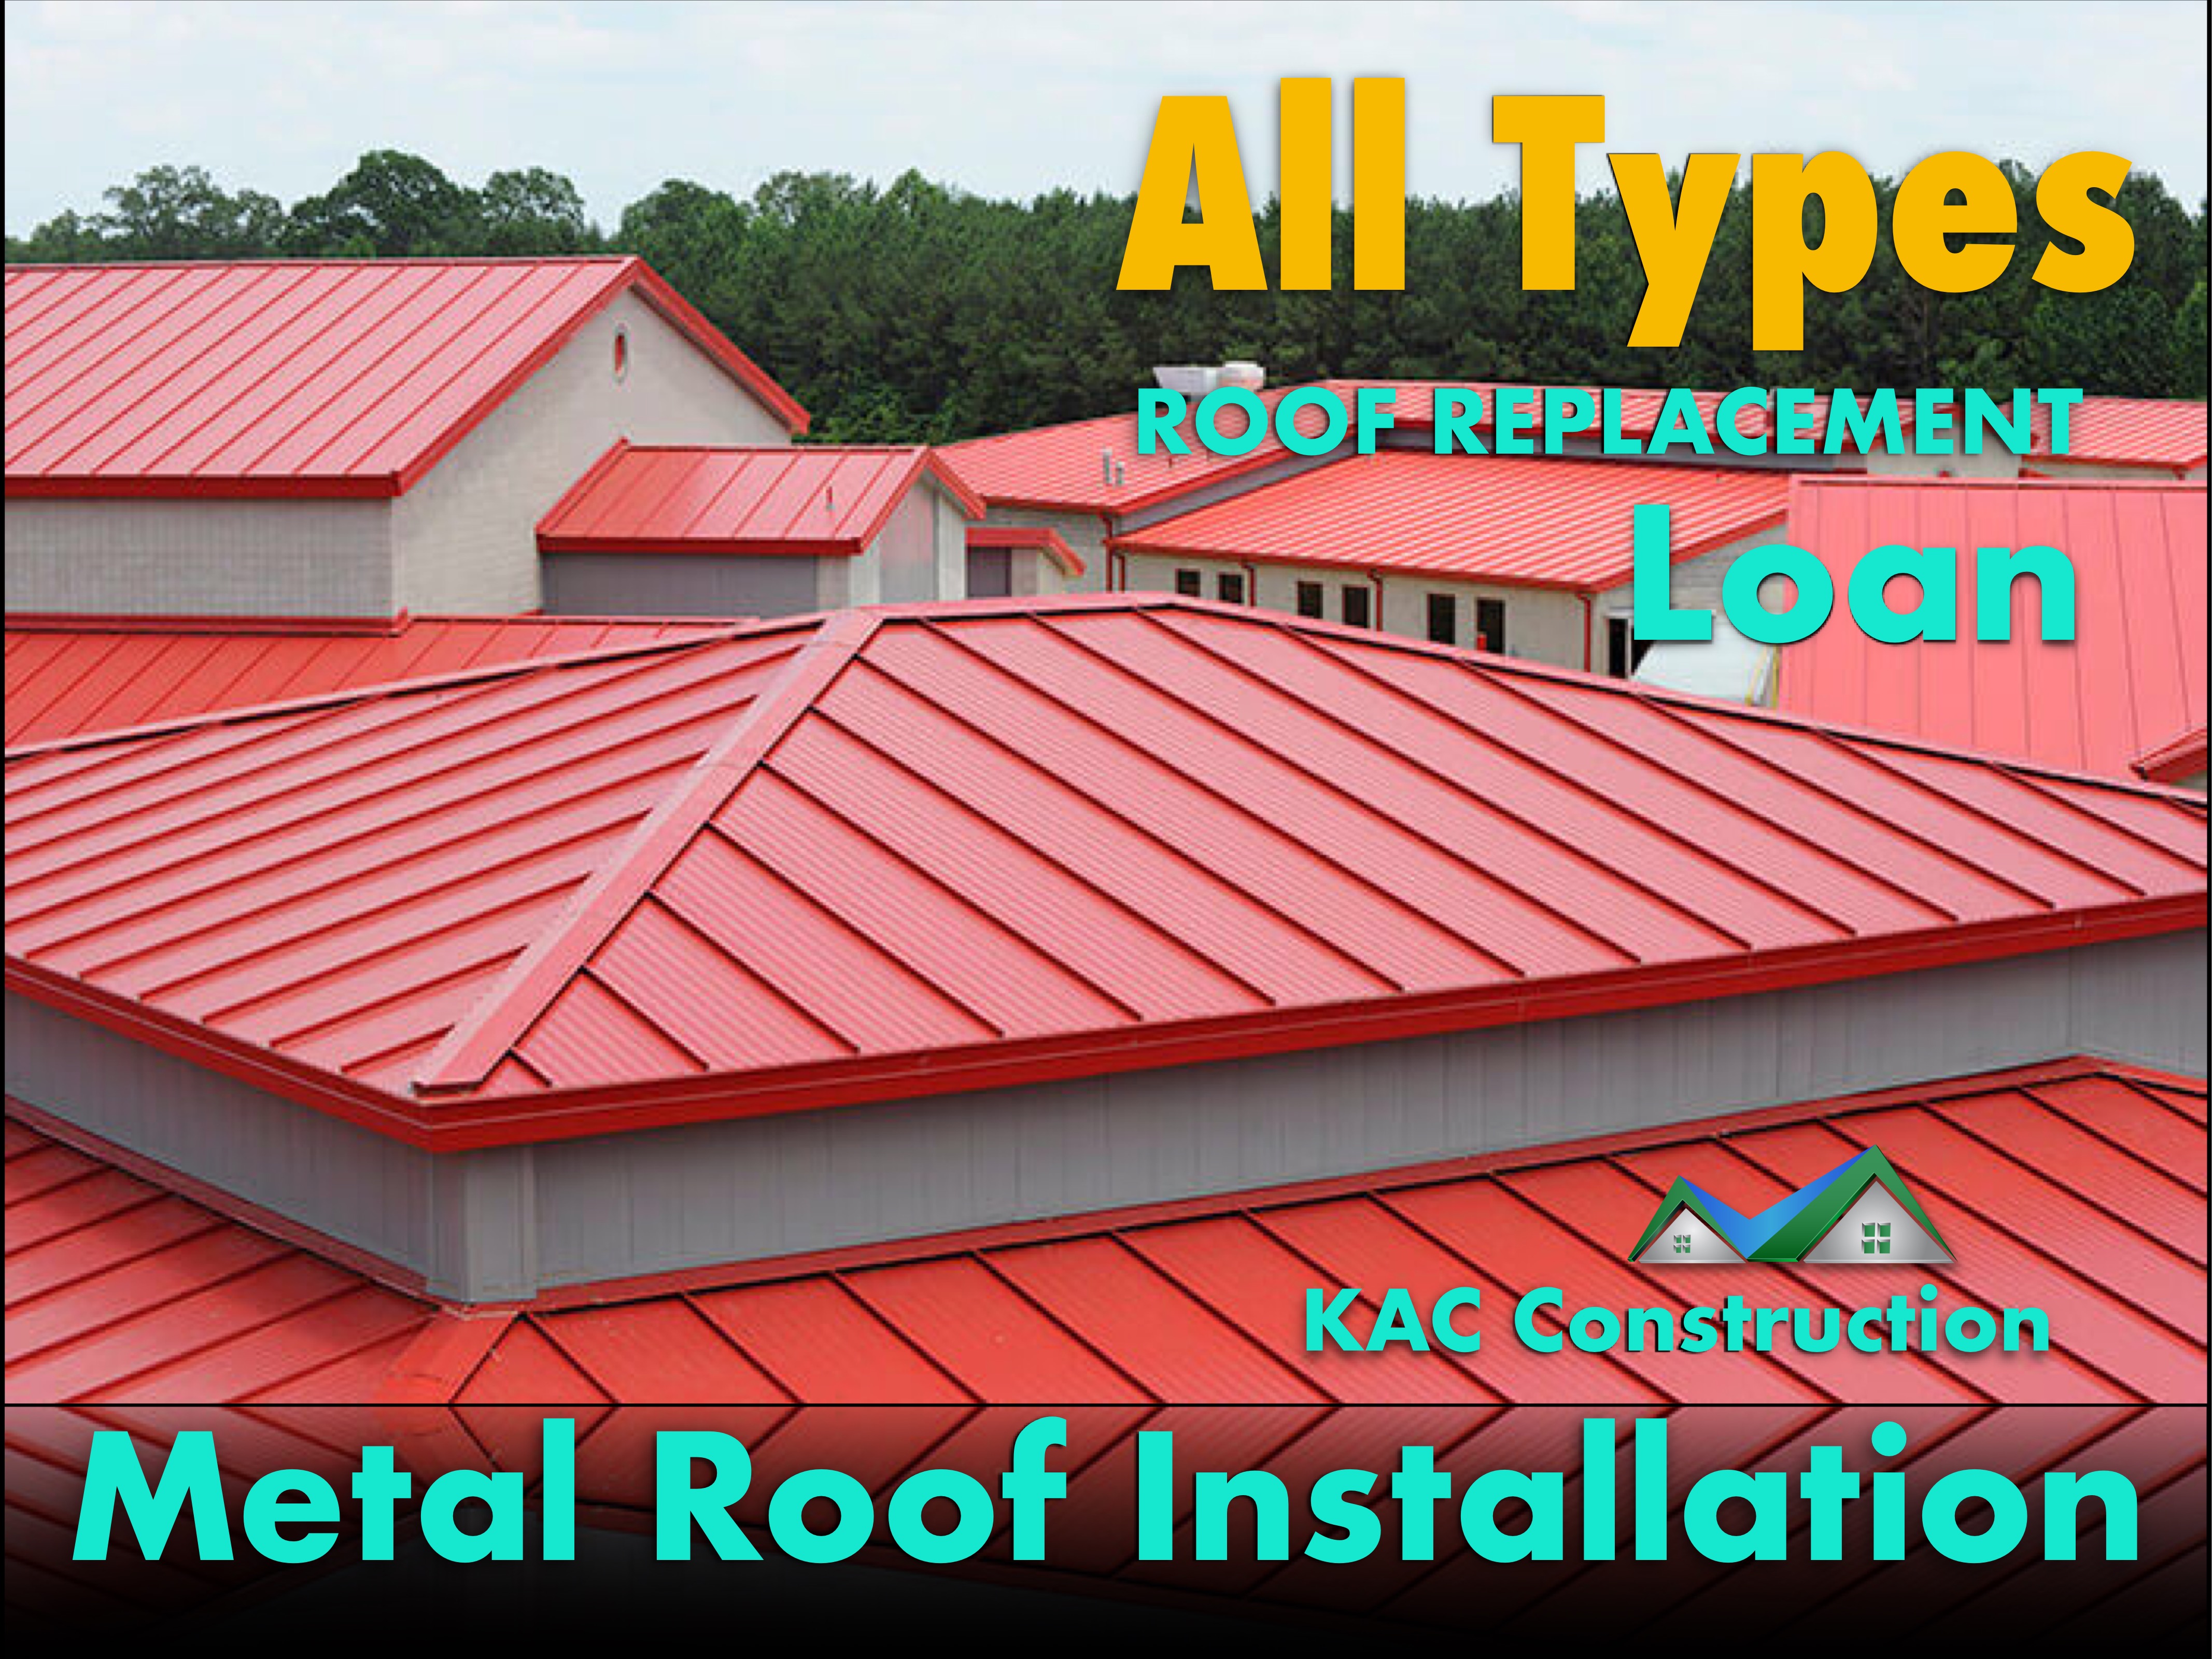 Metal roof ri, metal roof installation ri, metal roof installation loan, metal roof installation loan, metal roof Loan ri, roof installation ri, roof installation loan, roof installation loan ri,